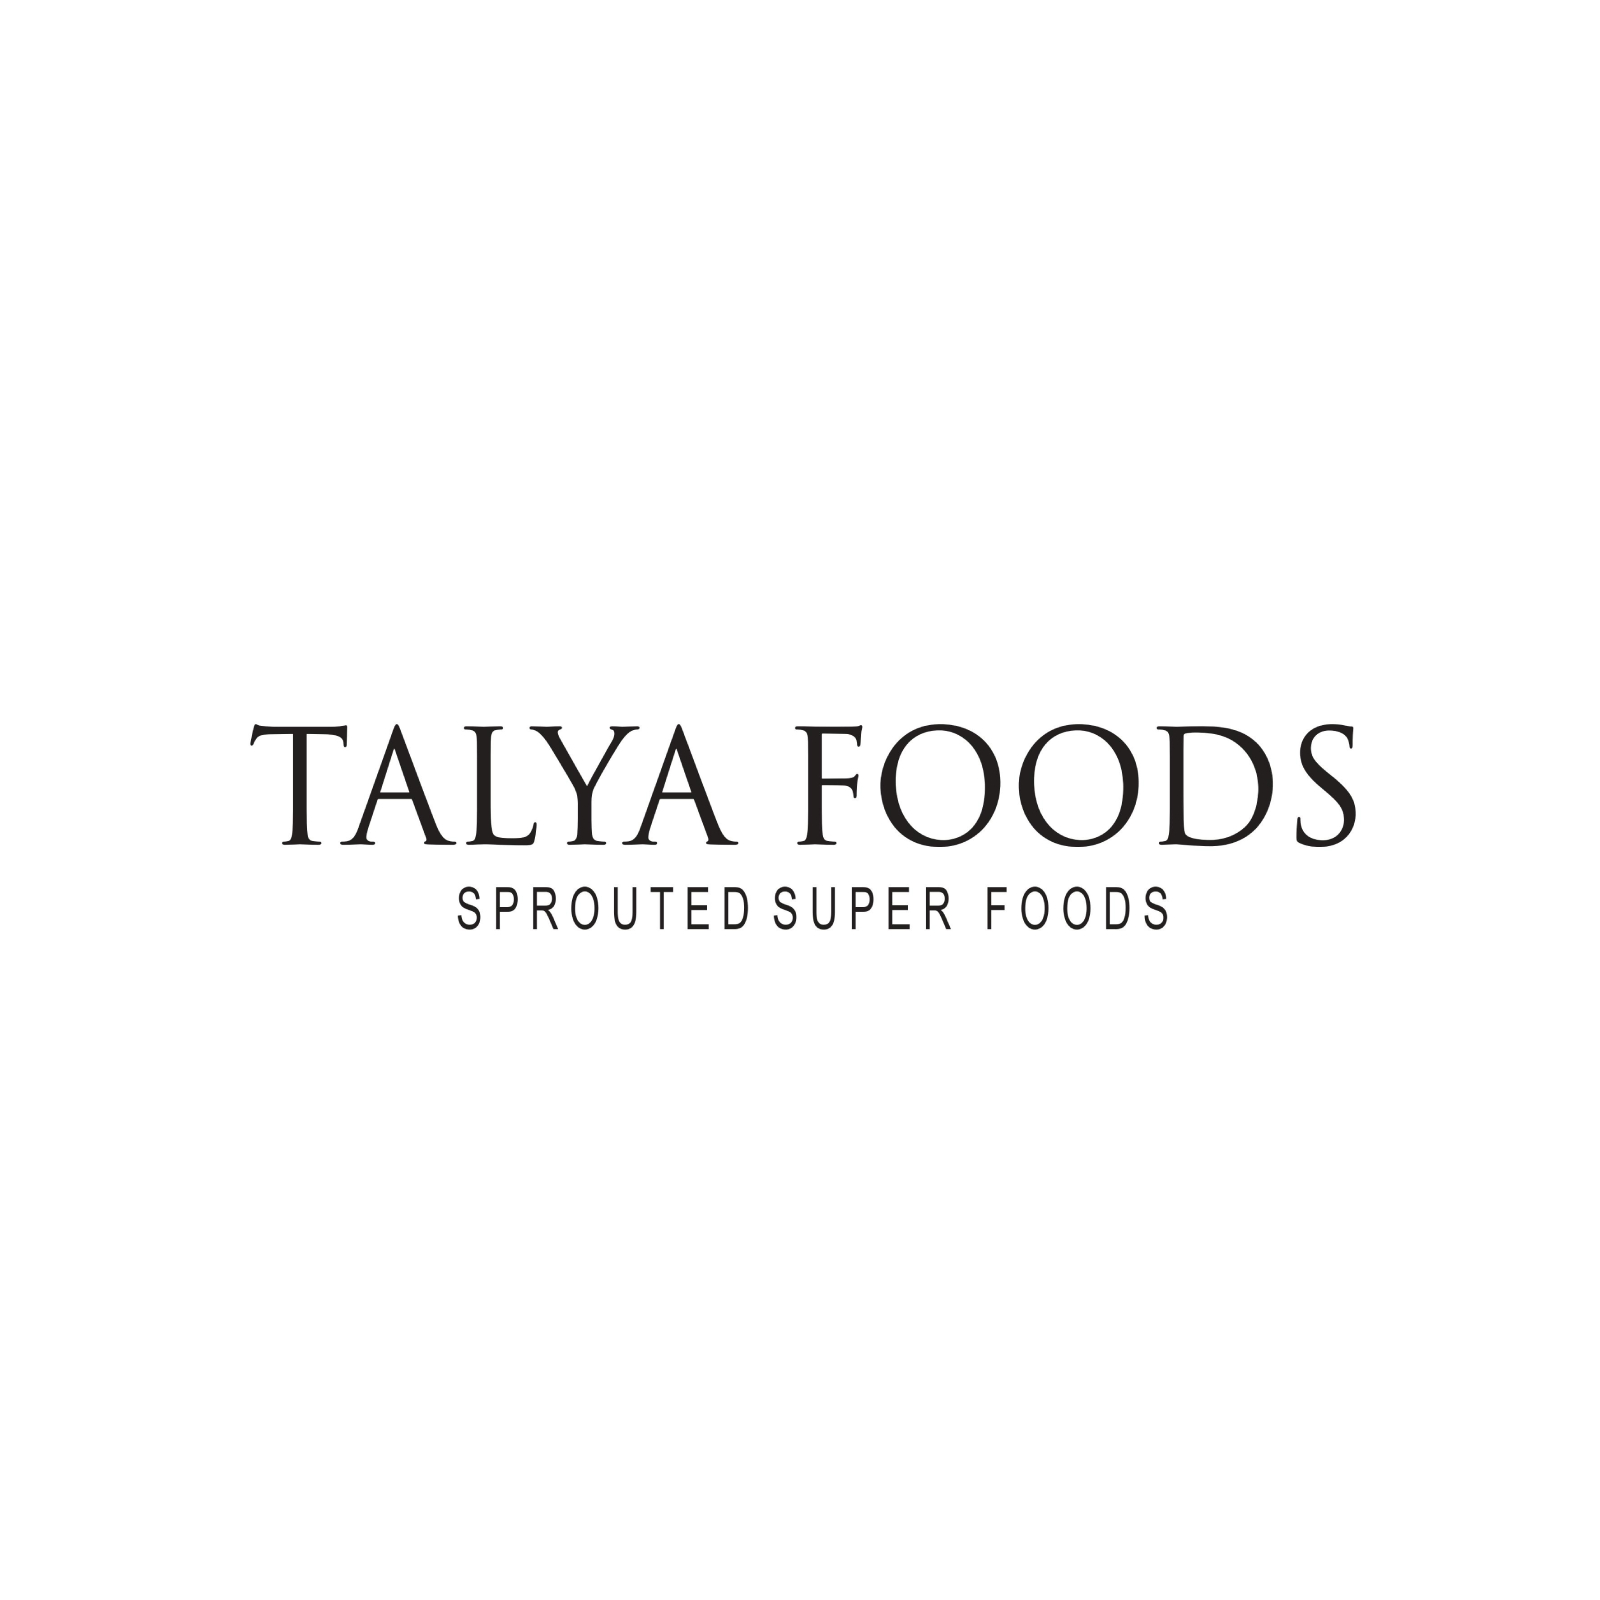 Talya Foods